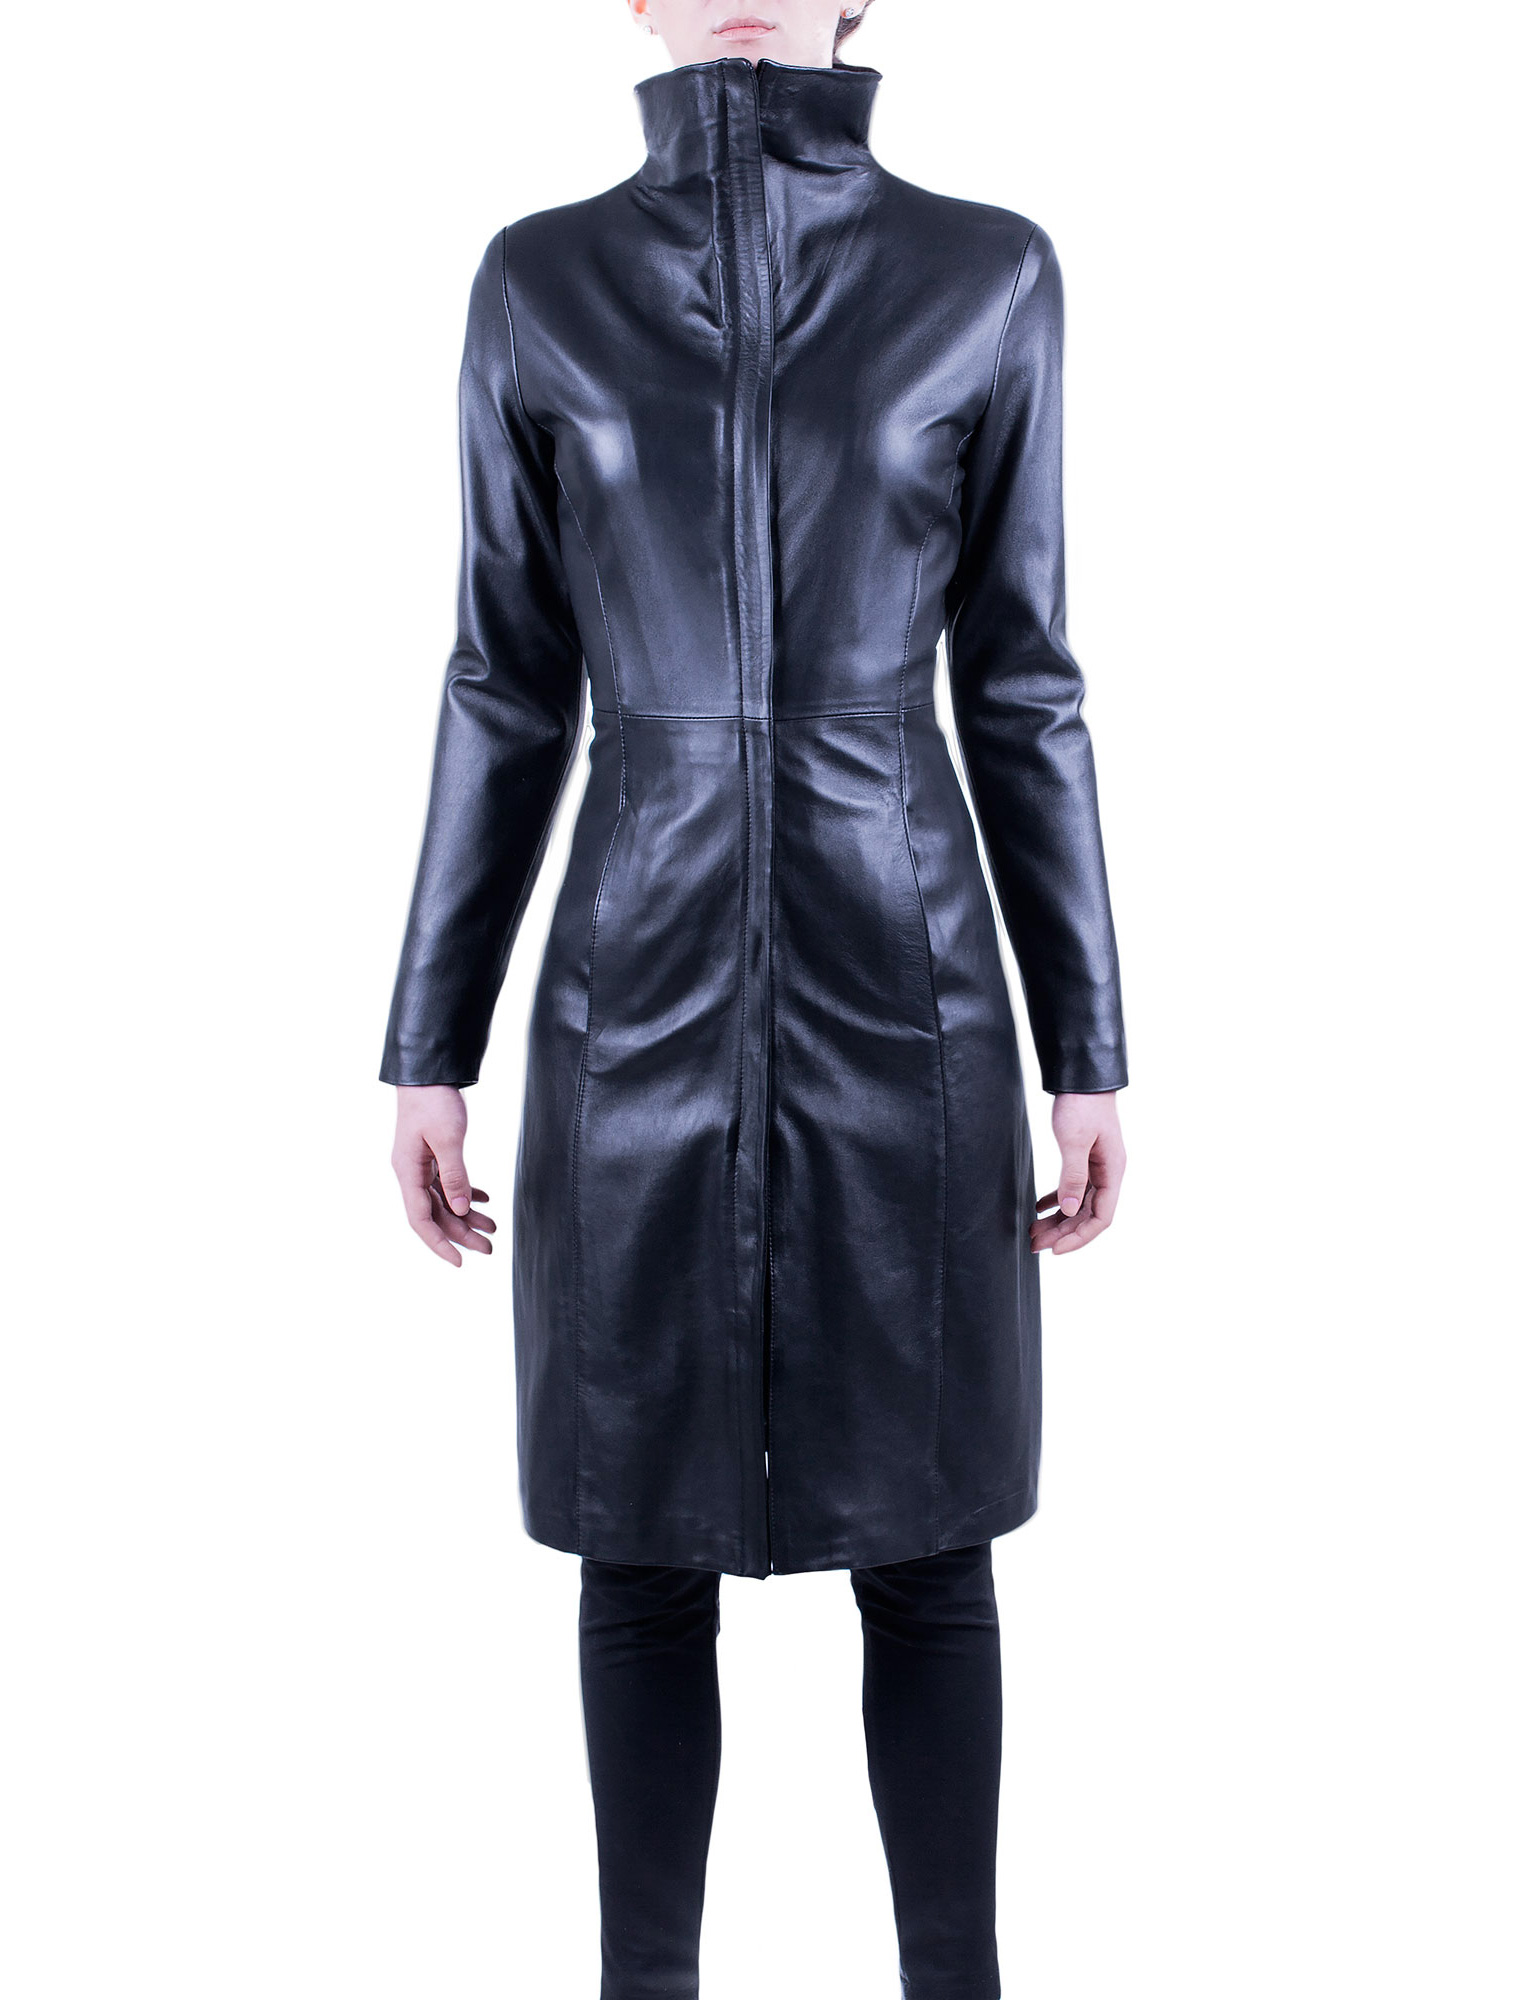 Spaziale Leather Half-Coat